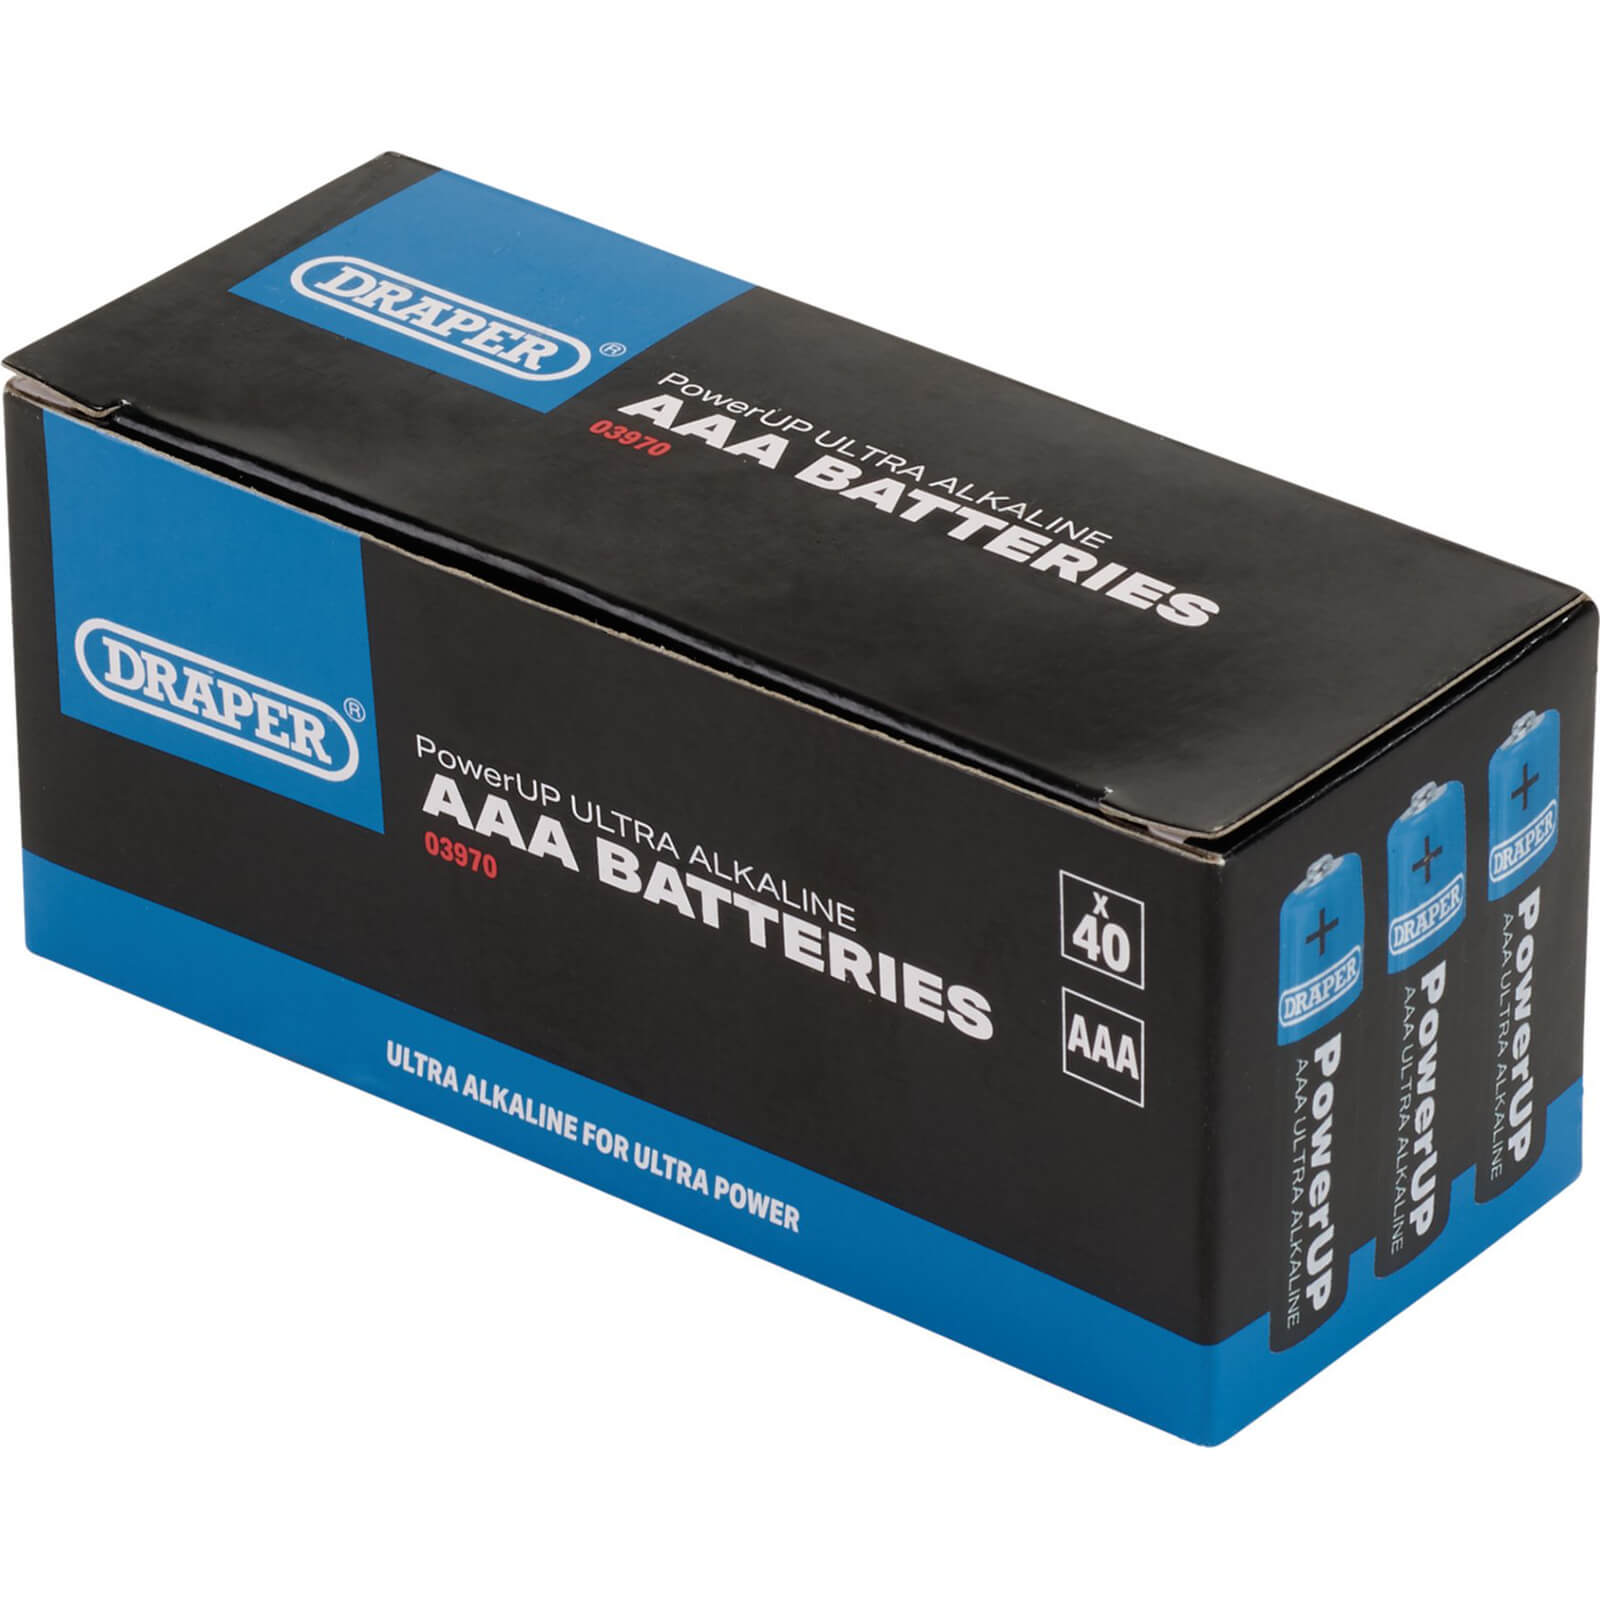 Image of Draper Powerup Ultra Alkaline AAA Batteries Pack of 40